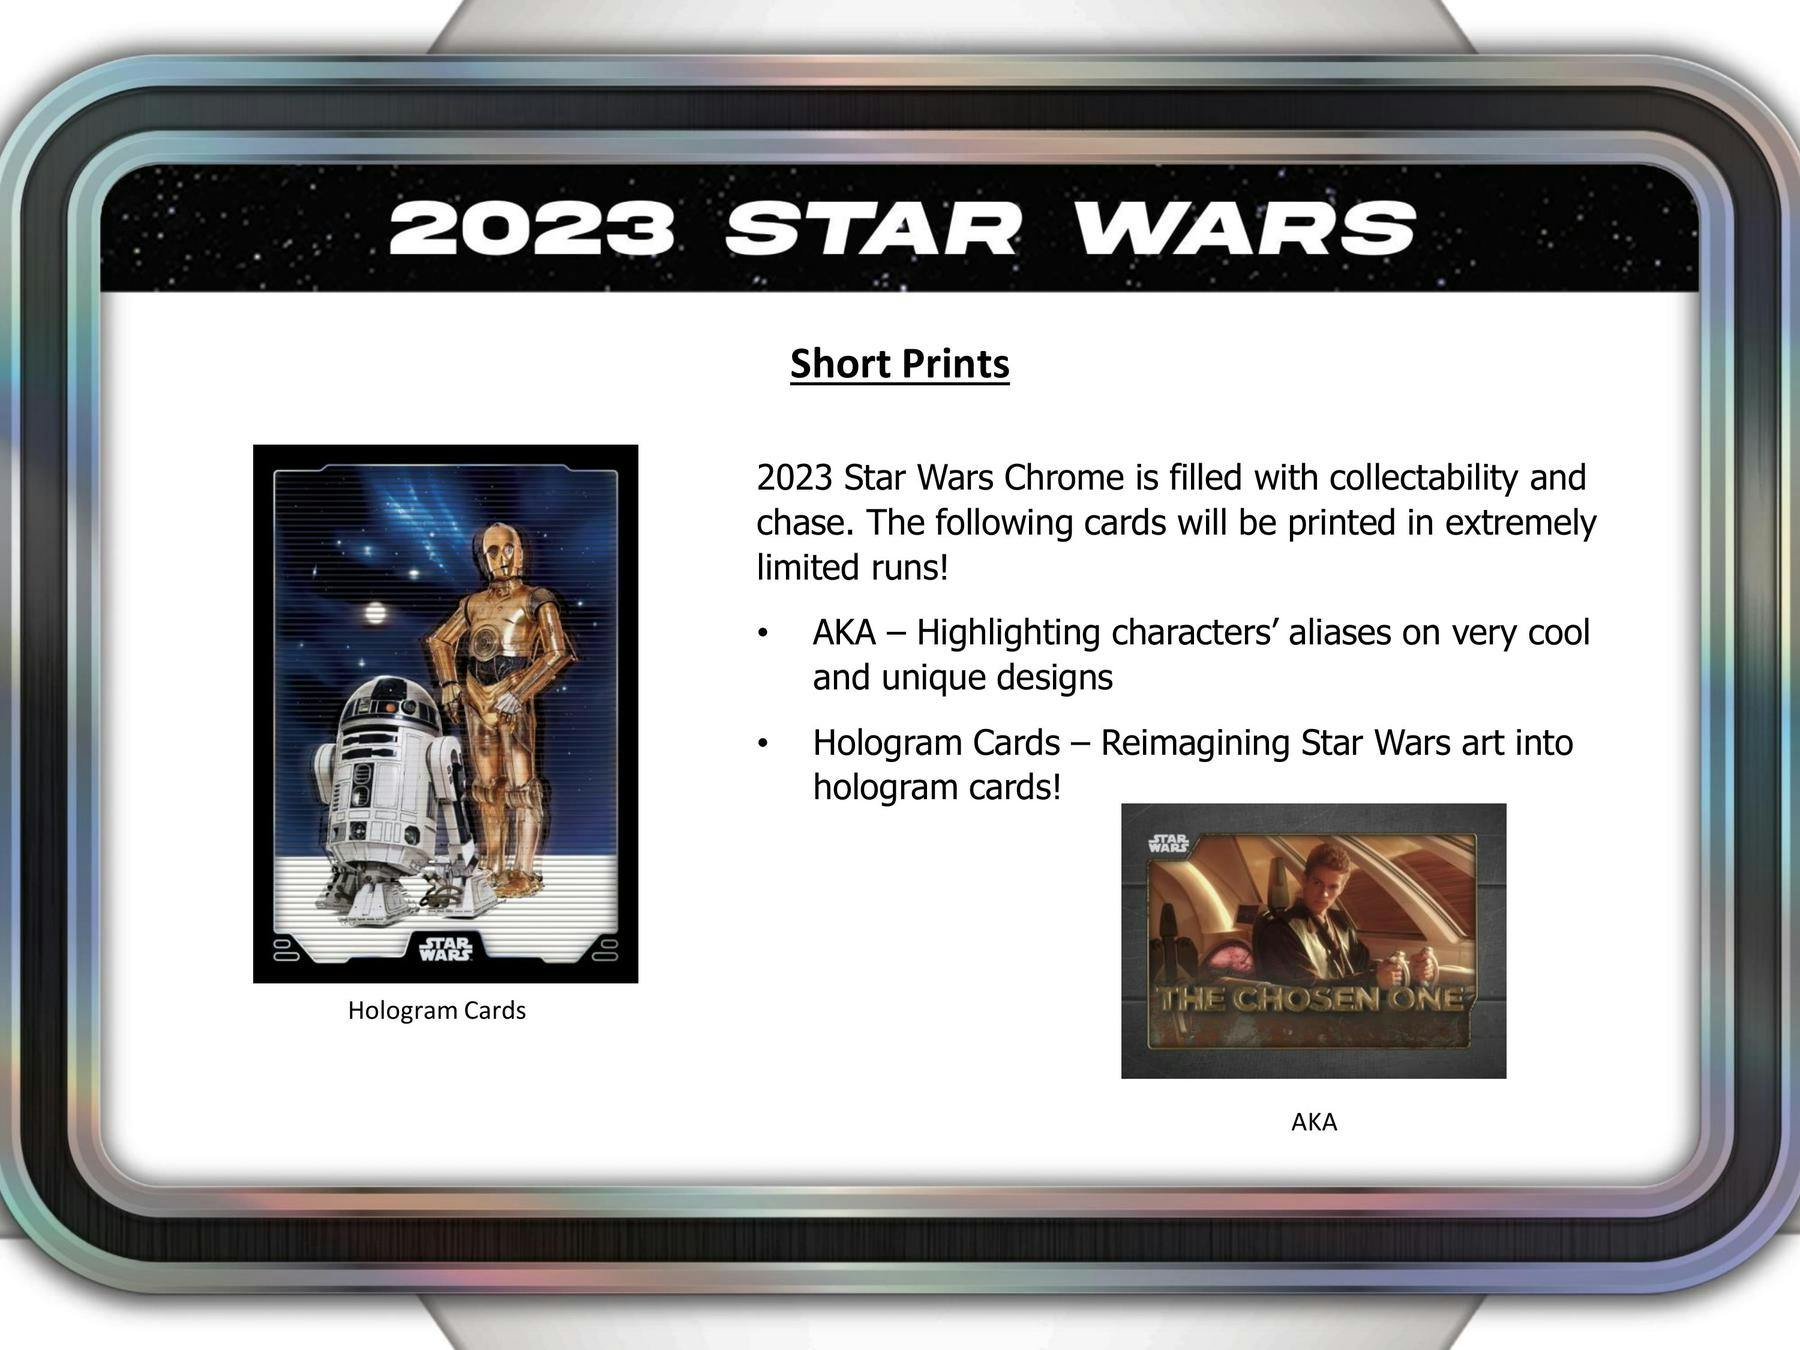 2023 Topps Star Wars Super Box